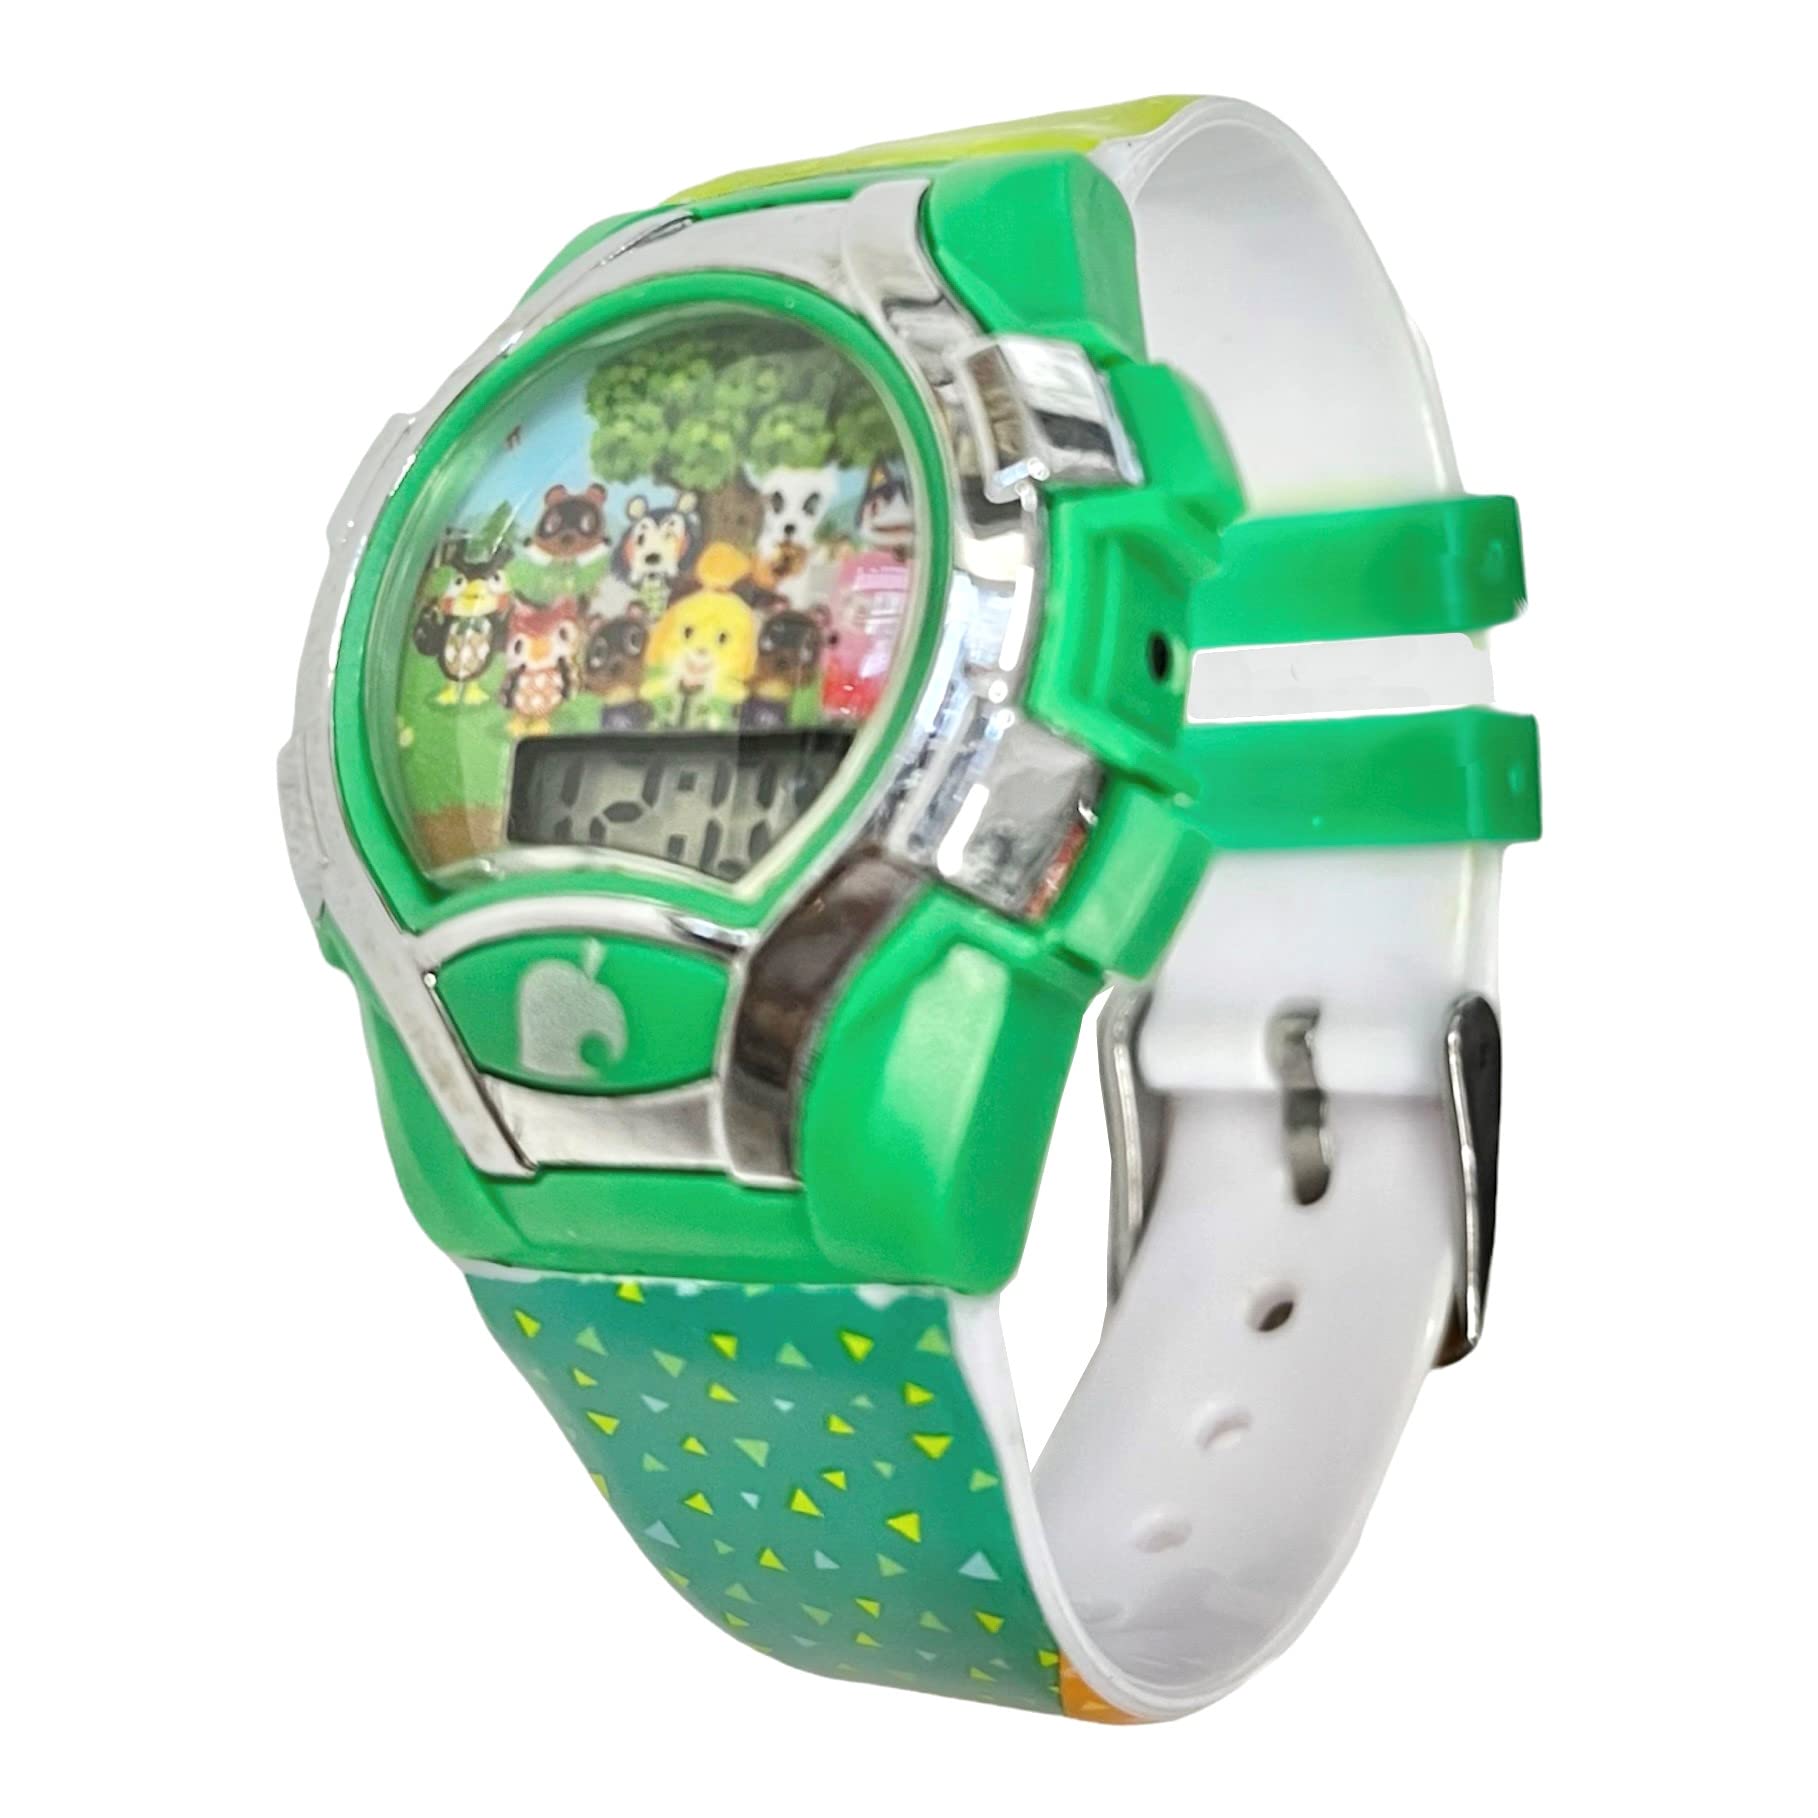 Accutime Kids Nintendo Animal Crossing Green Digital Flashing LCD Quartz Childrens Wrist Watch for Boys, Girls, Toddlers with Green & Orange Multicolor Strap (Model: ANC4000AZ)